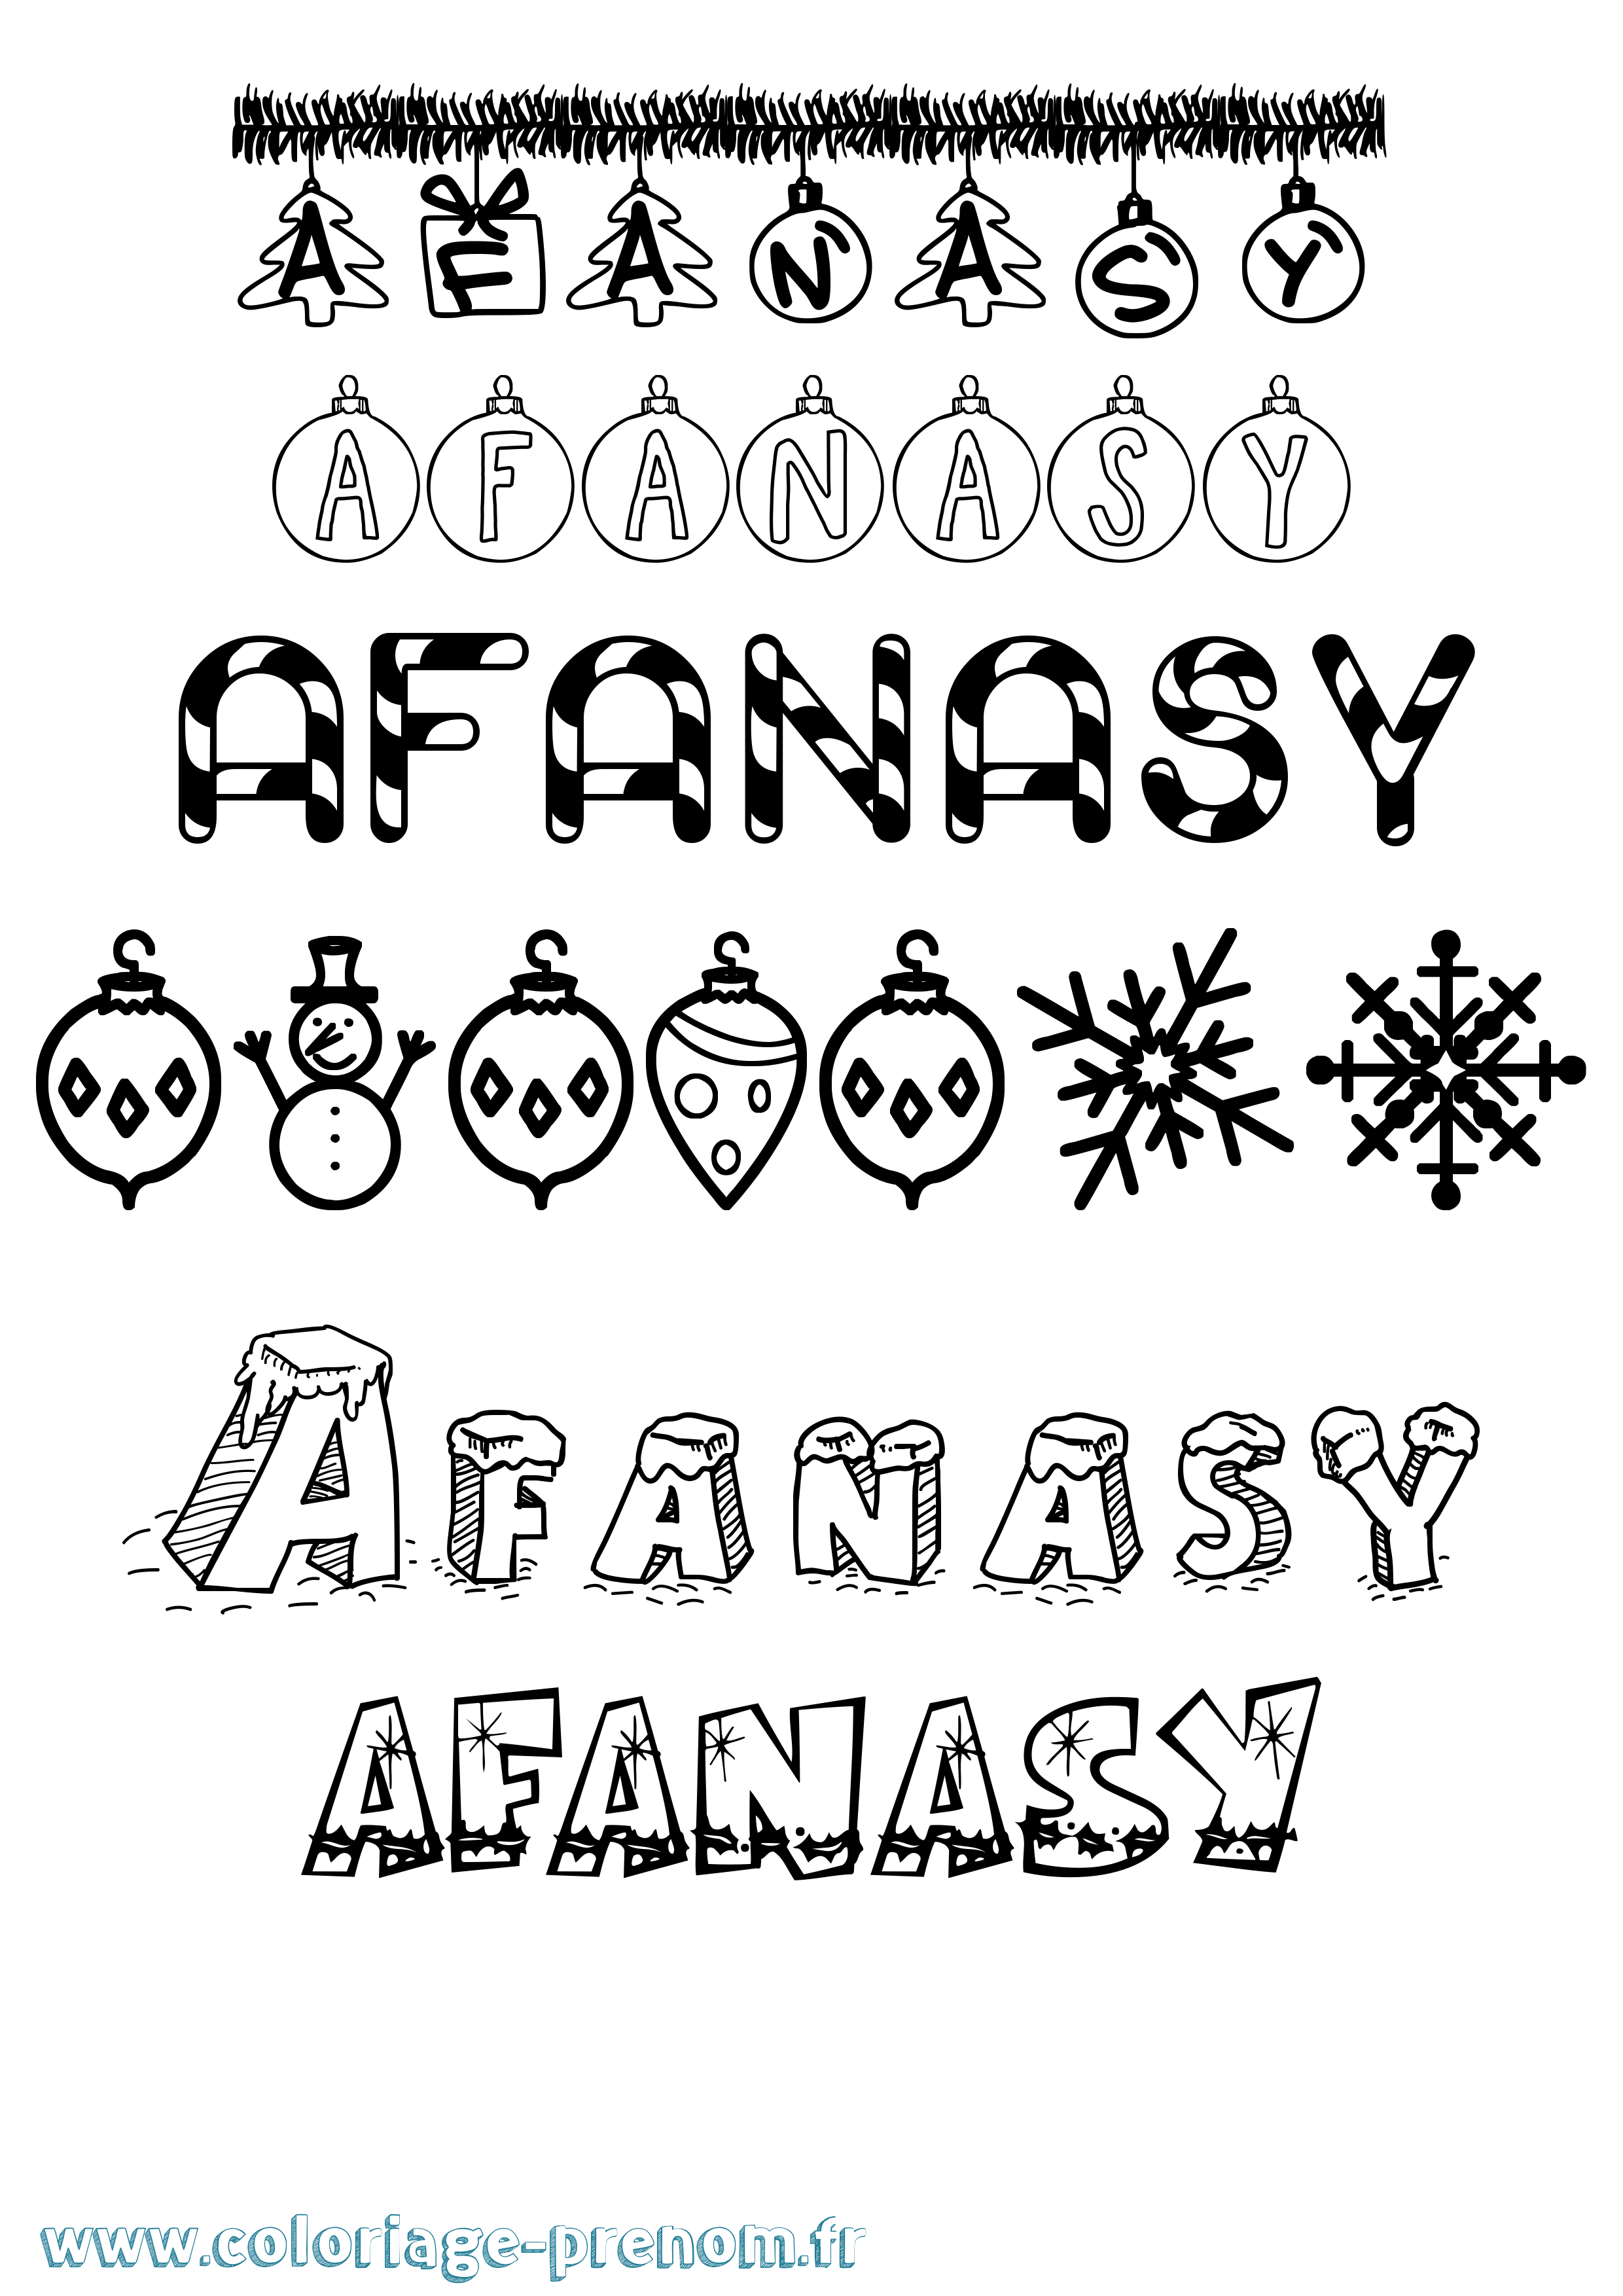 Coloriage prénom Afanasy Noël